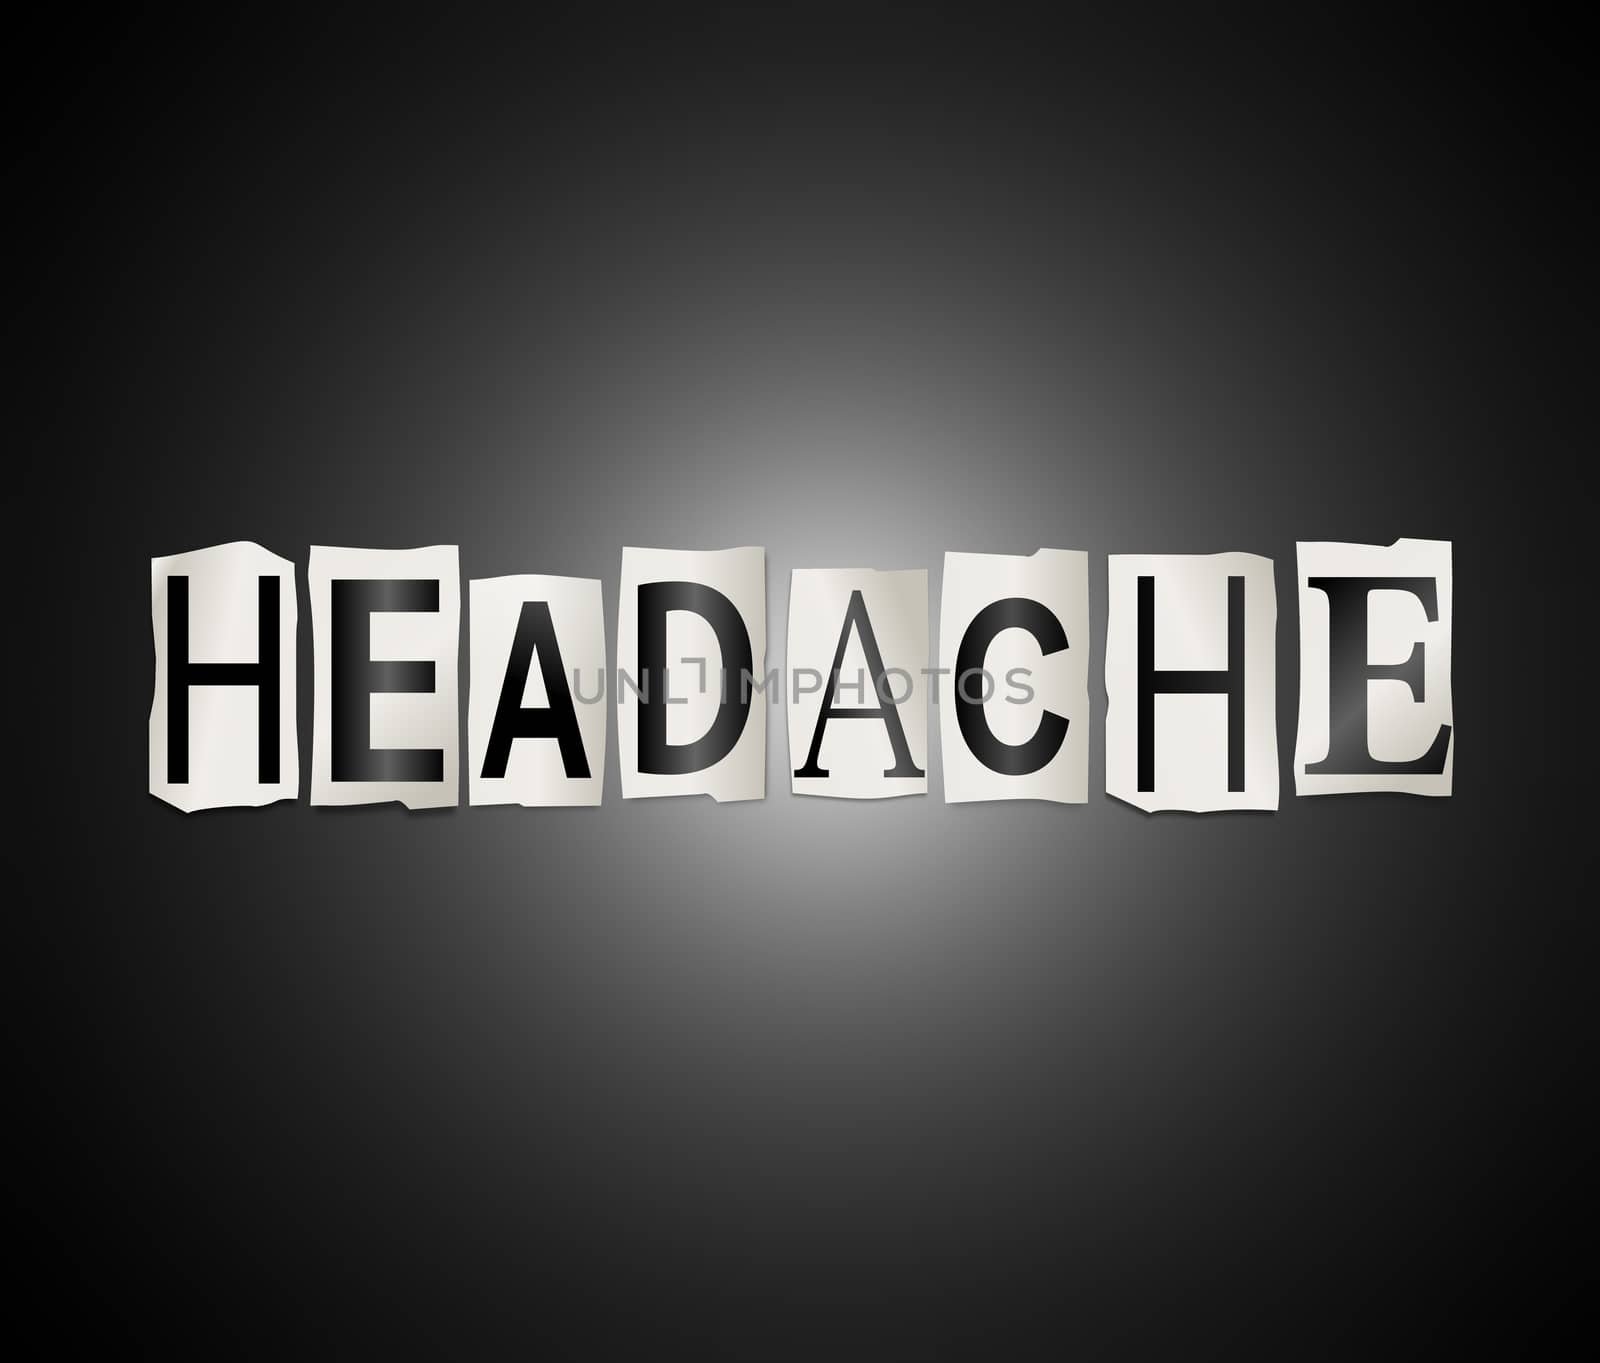 Headache concept. by 72soul